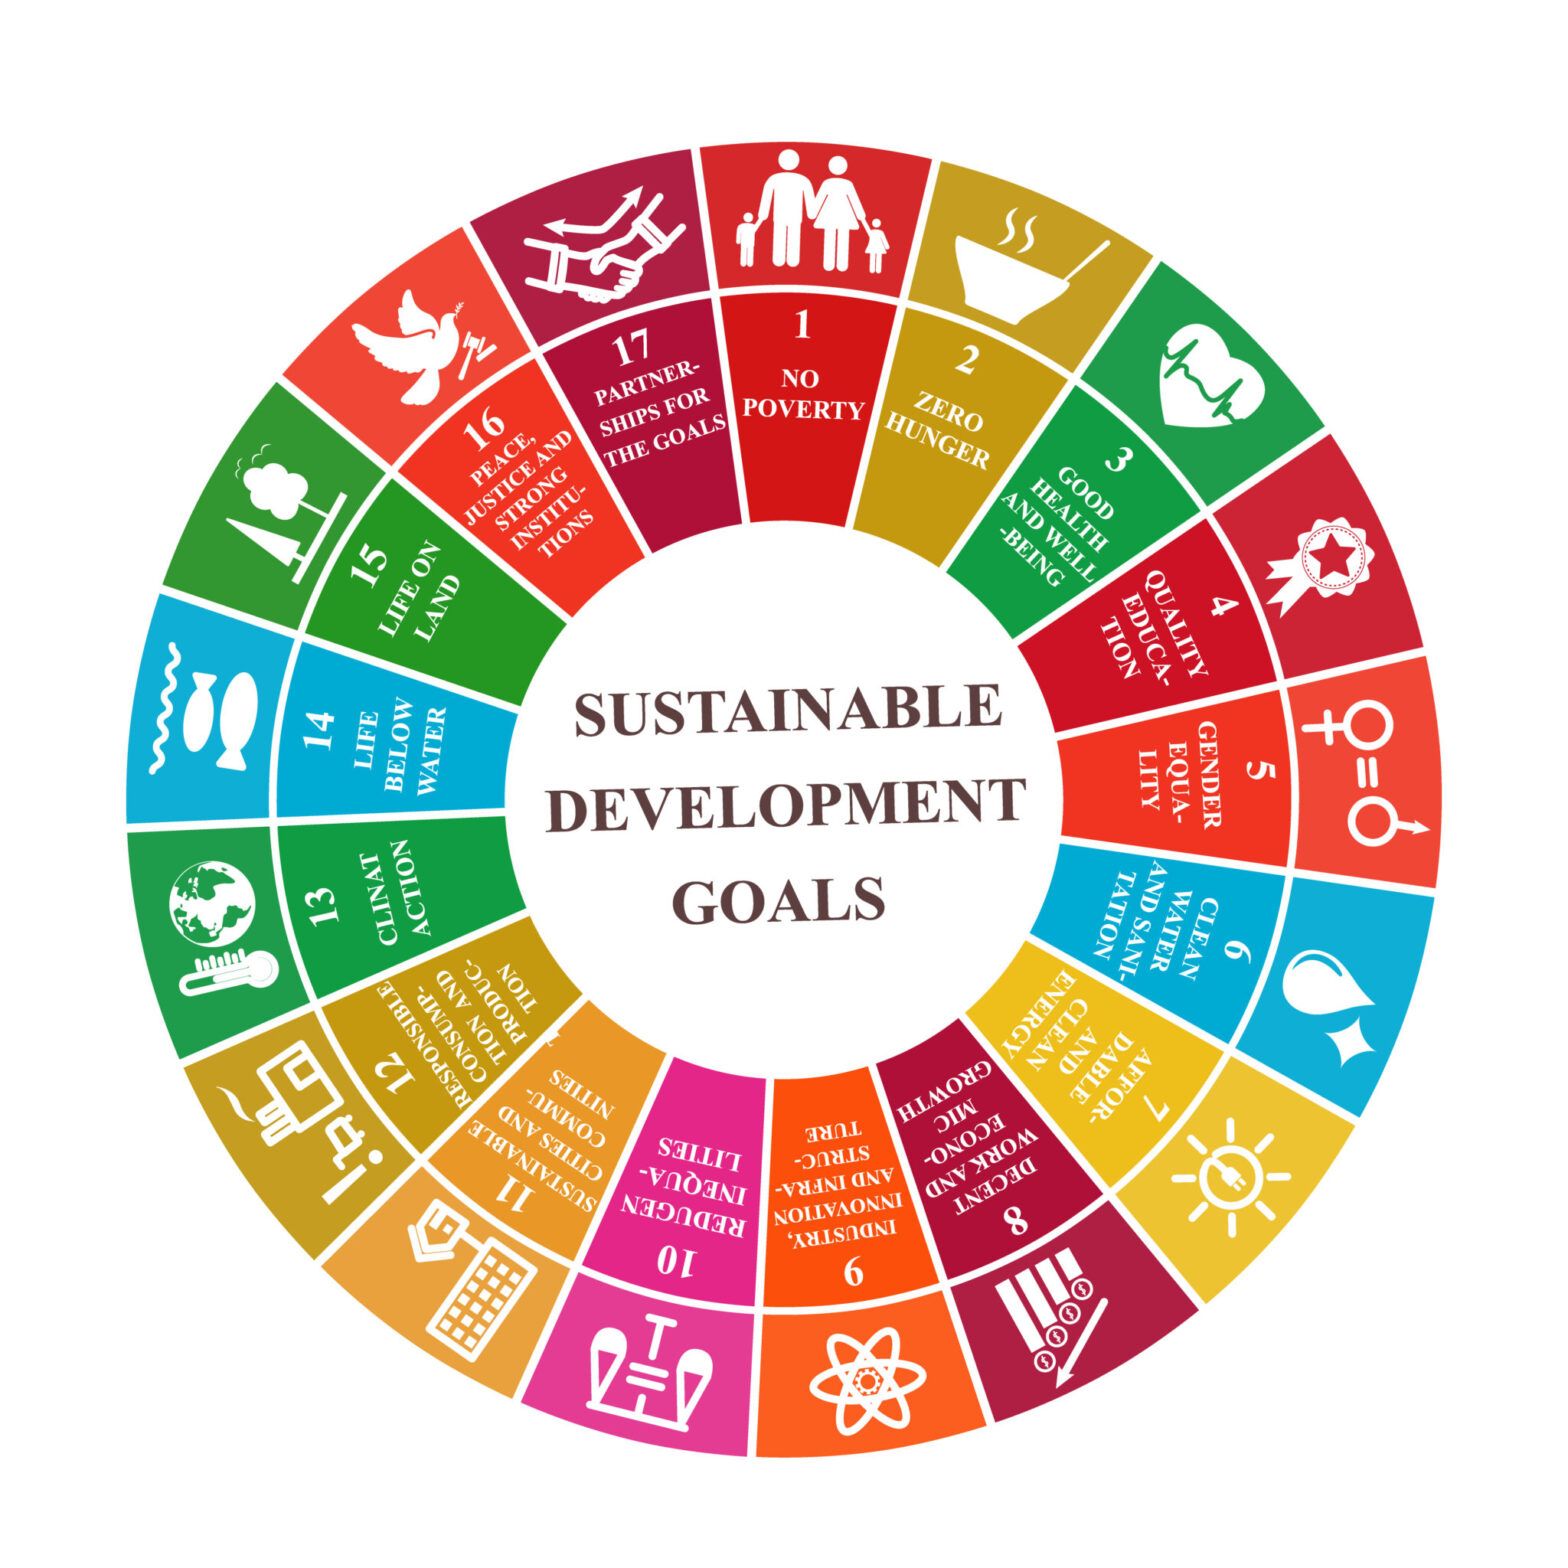 BMO Global Asset Management fund’s progress on UN SDGs